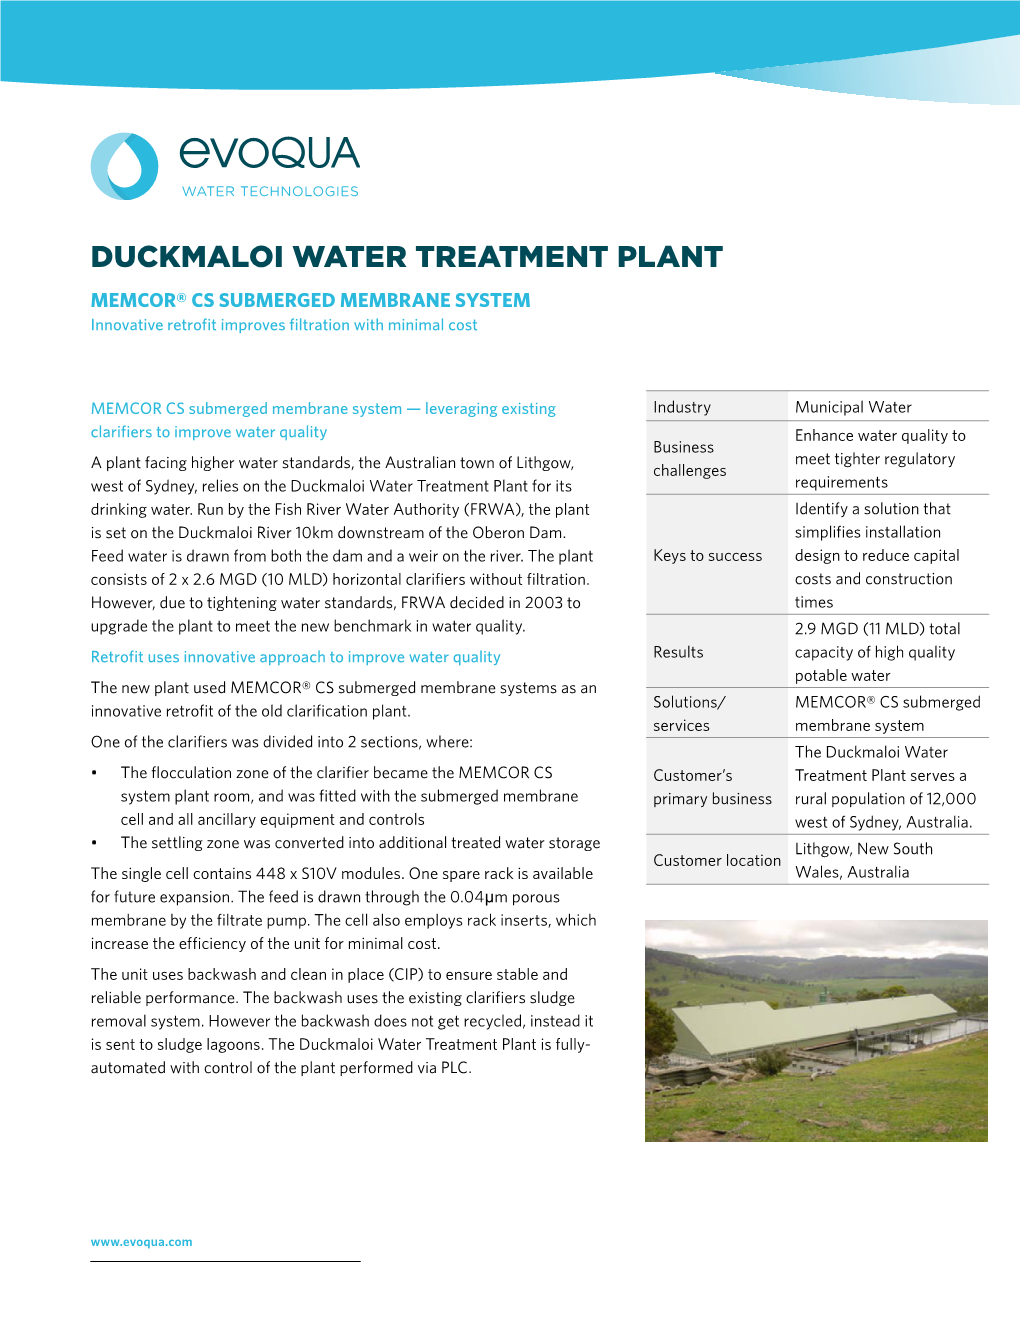 Duckmaloi Water Treatment Plant MEMCOR® CS Submerged Membrane System Innovative Retrofit Improves Filtration with Minimal Cost